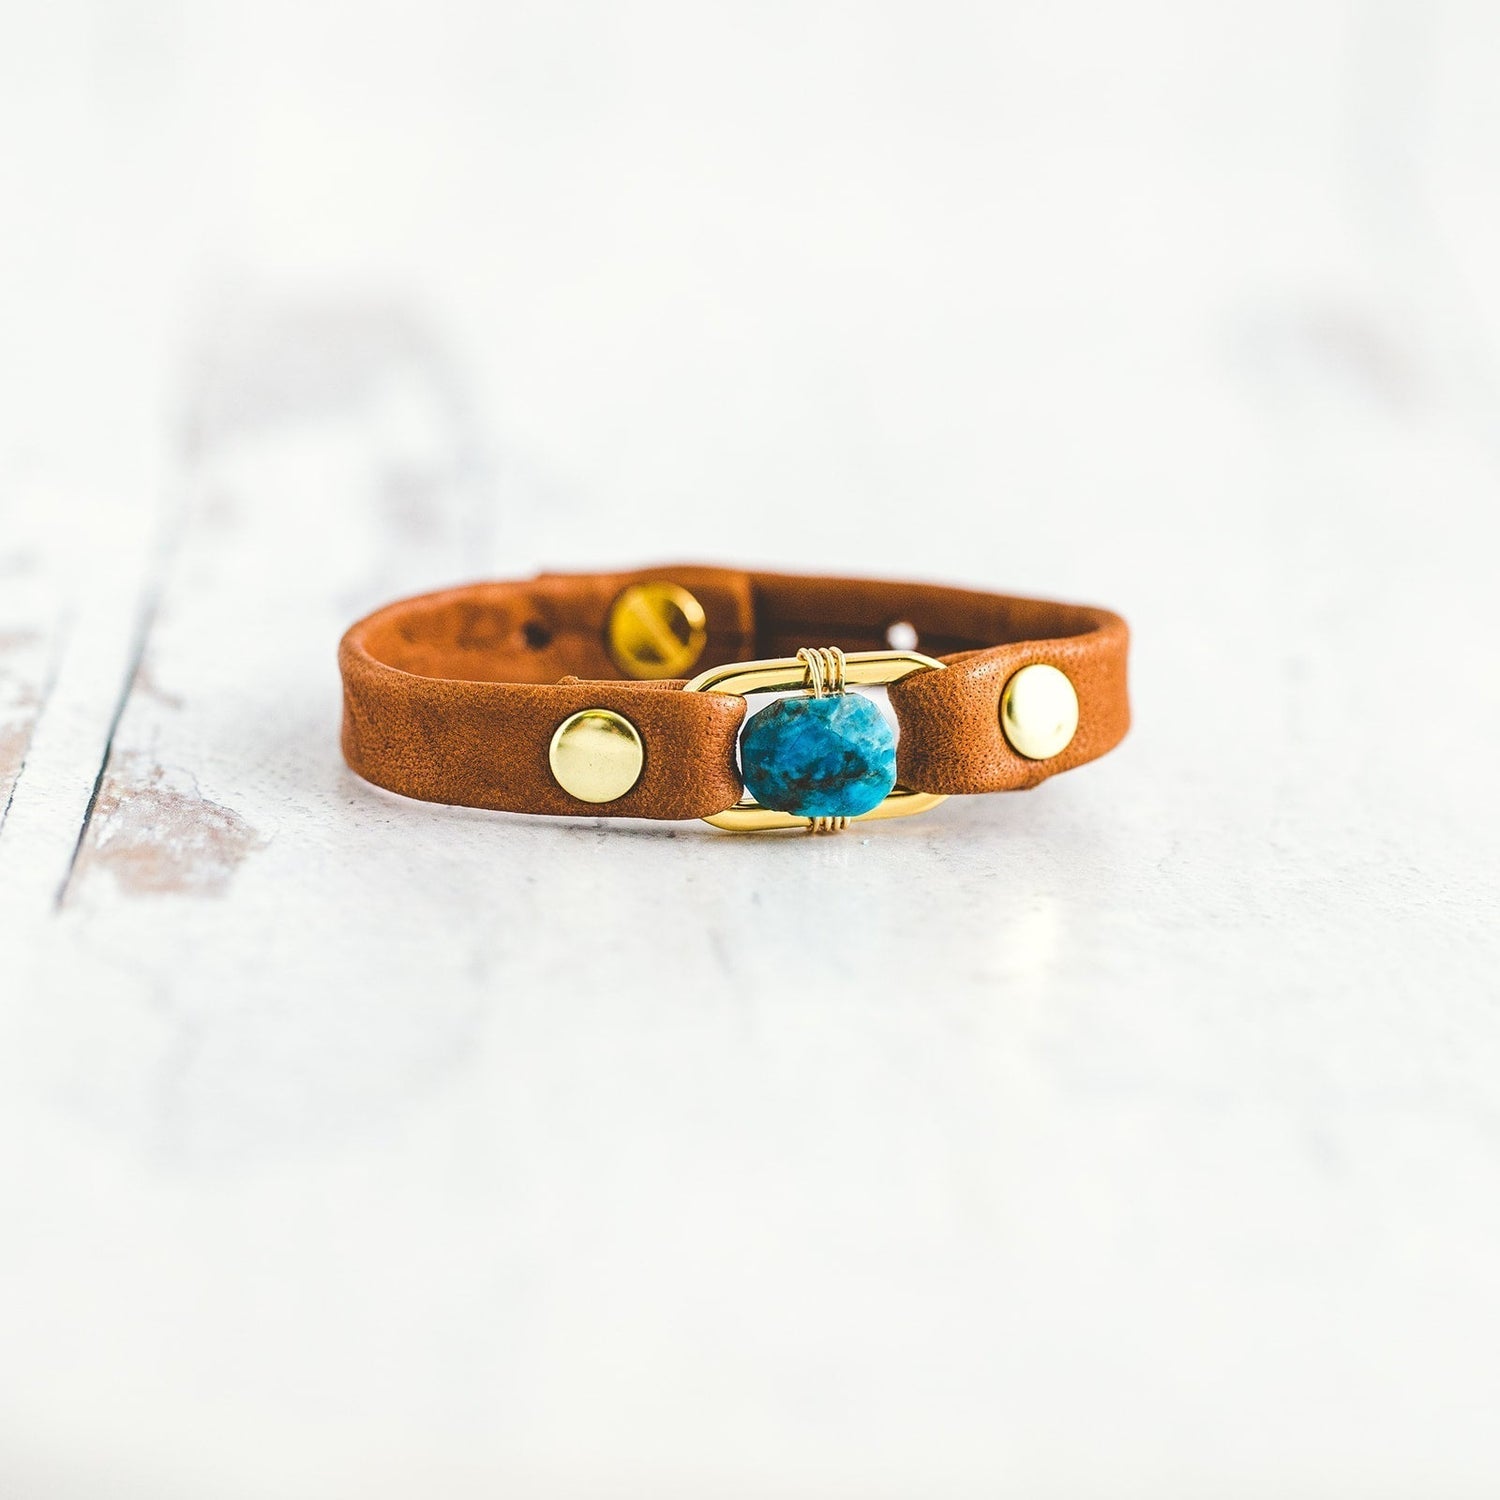 February - Workshop: Make Your Own Giving Bracelet